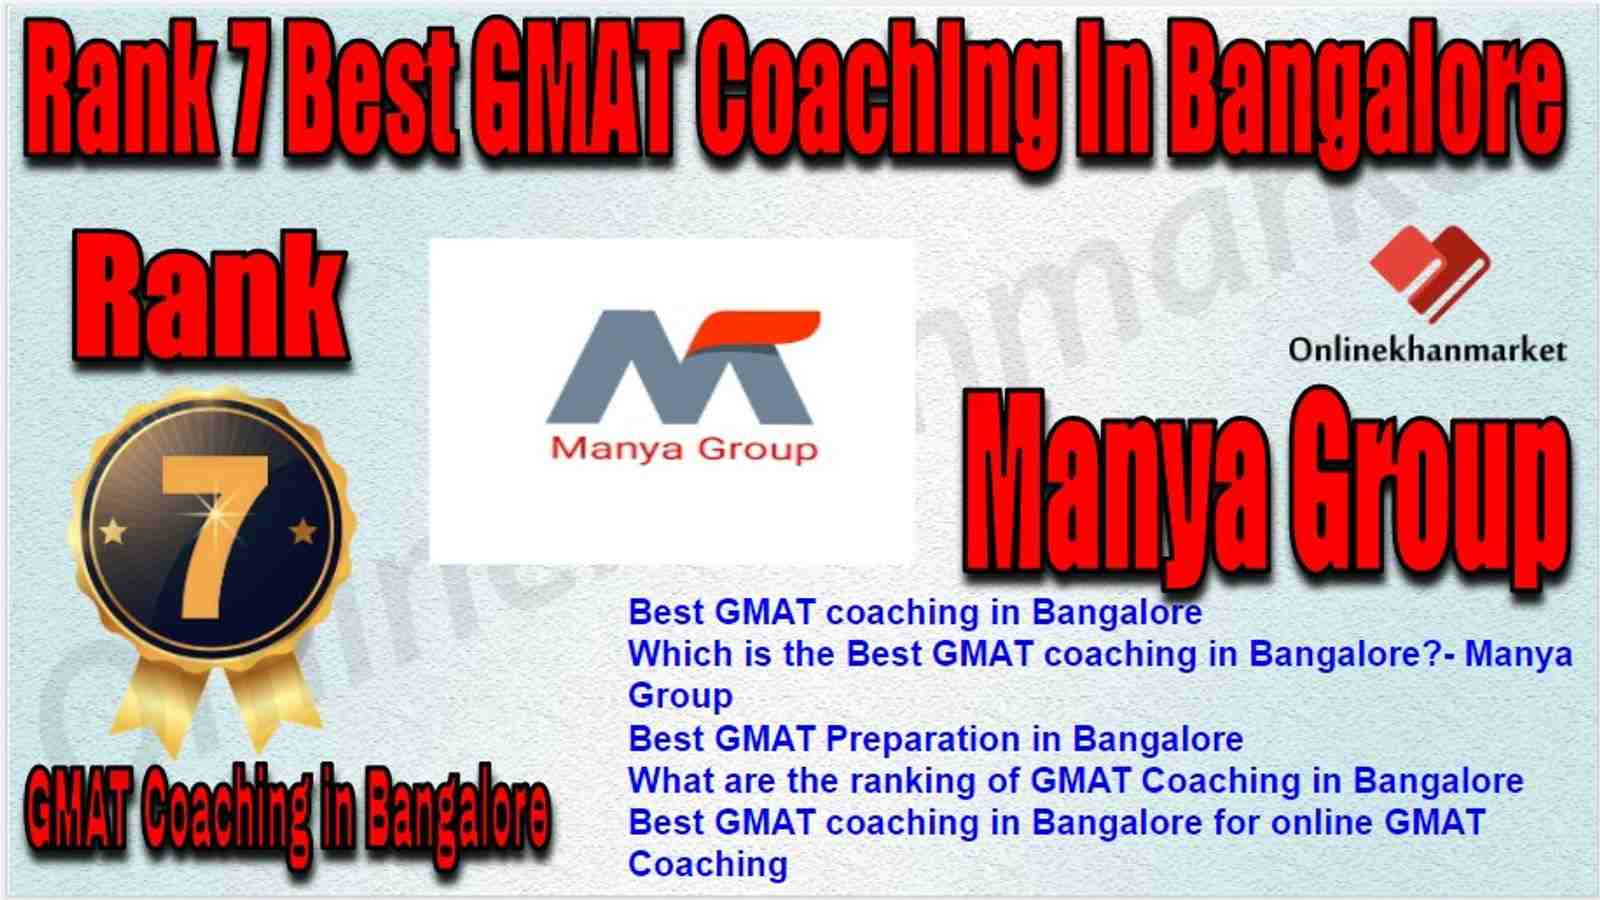 Rank 7 Best GMAT Coaching in Bangalore